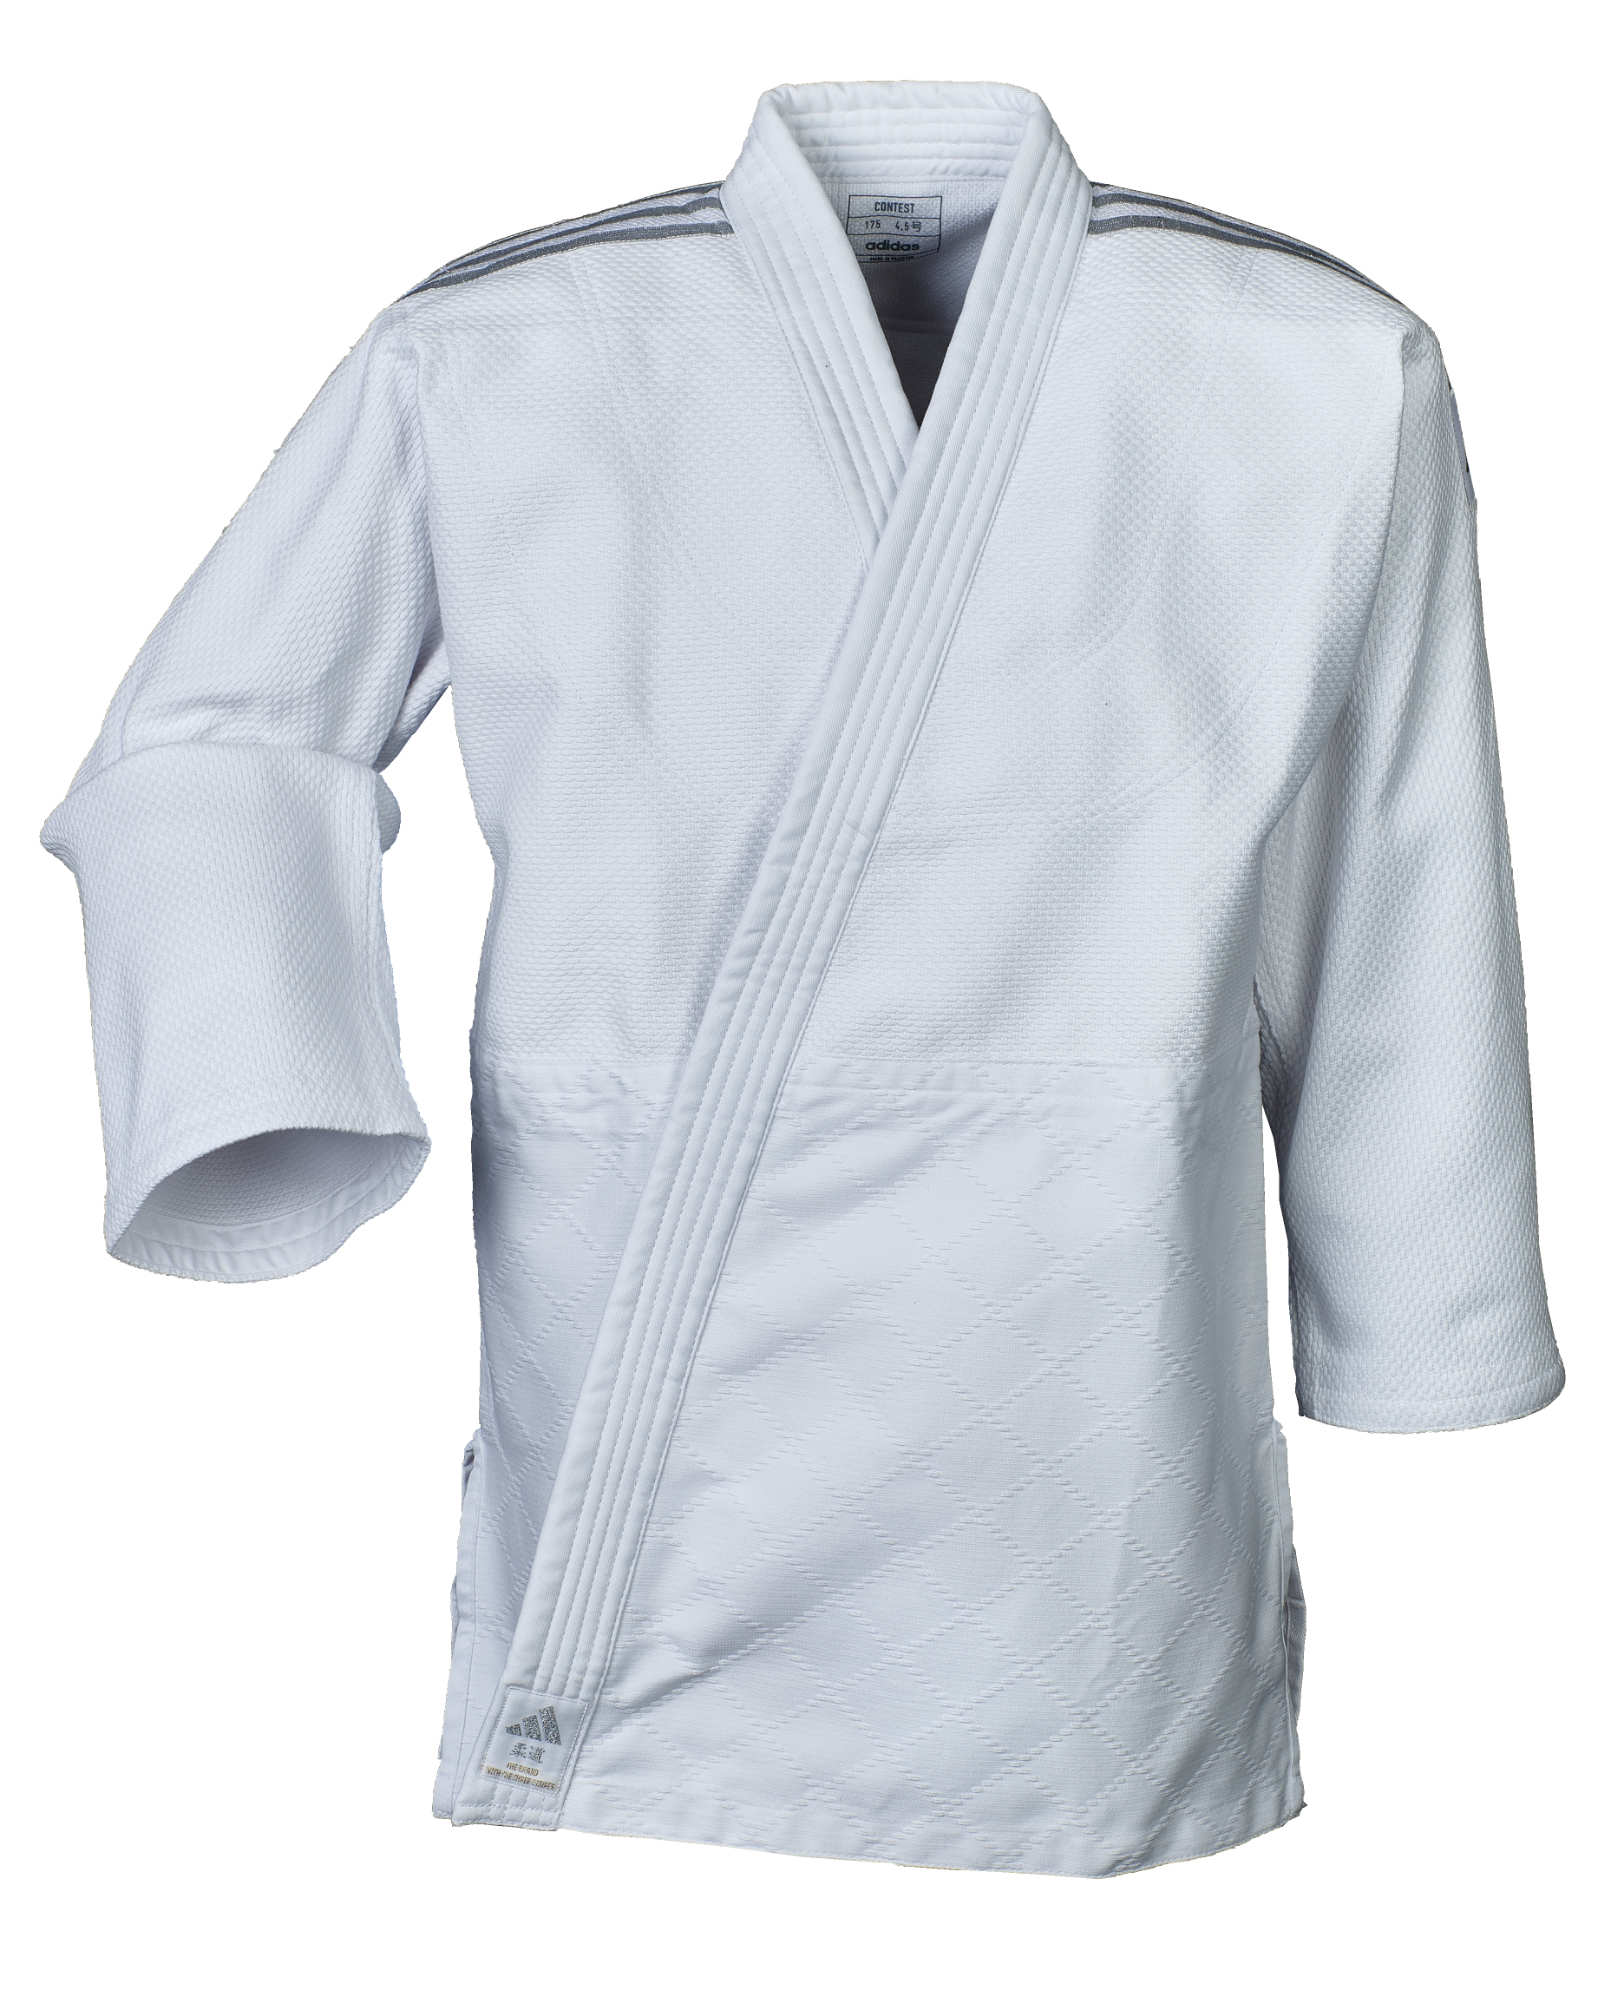 adidas judo gi Contest J650 white/silver stripes